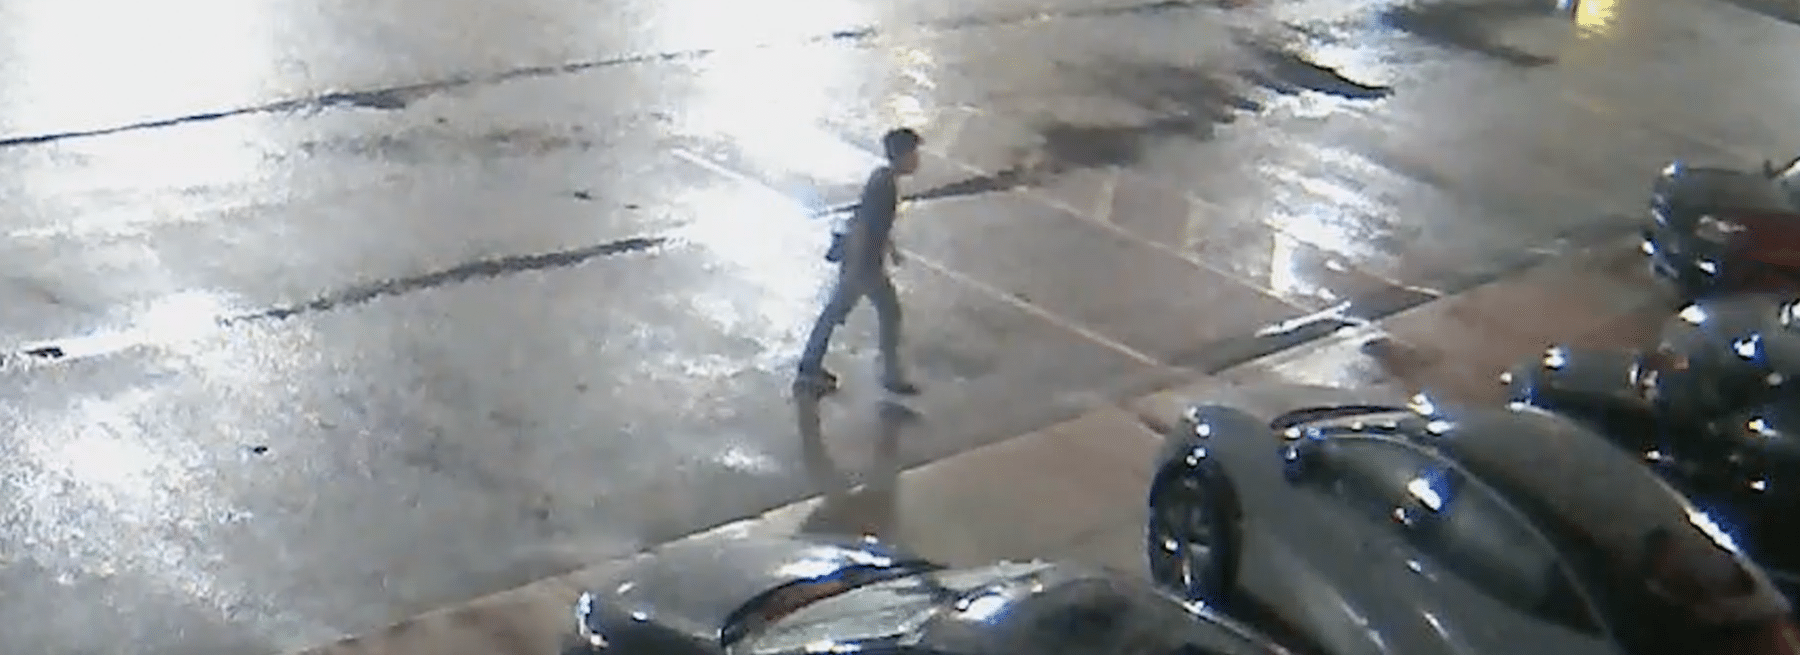 Burglar removed from auto dealership